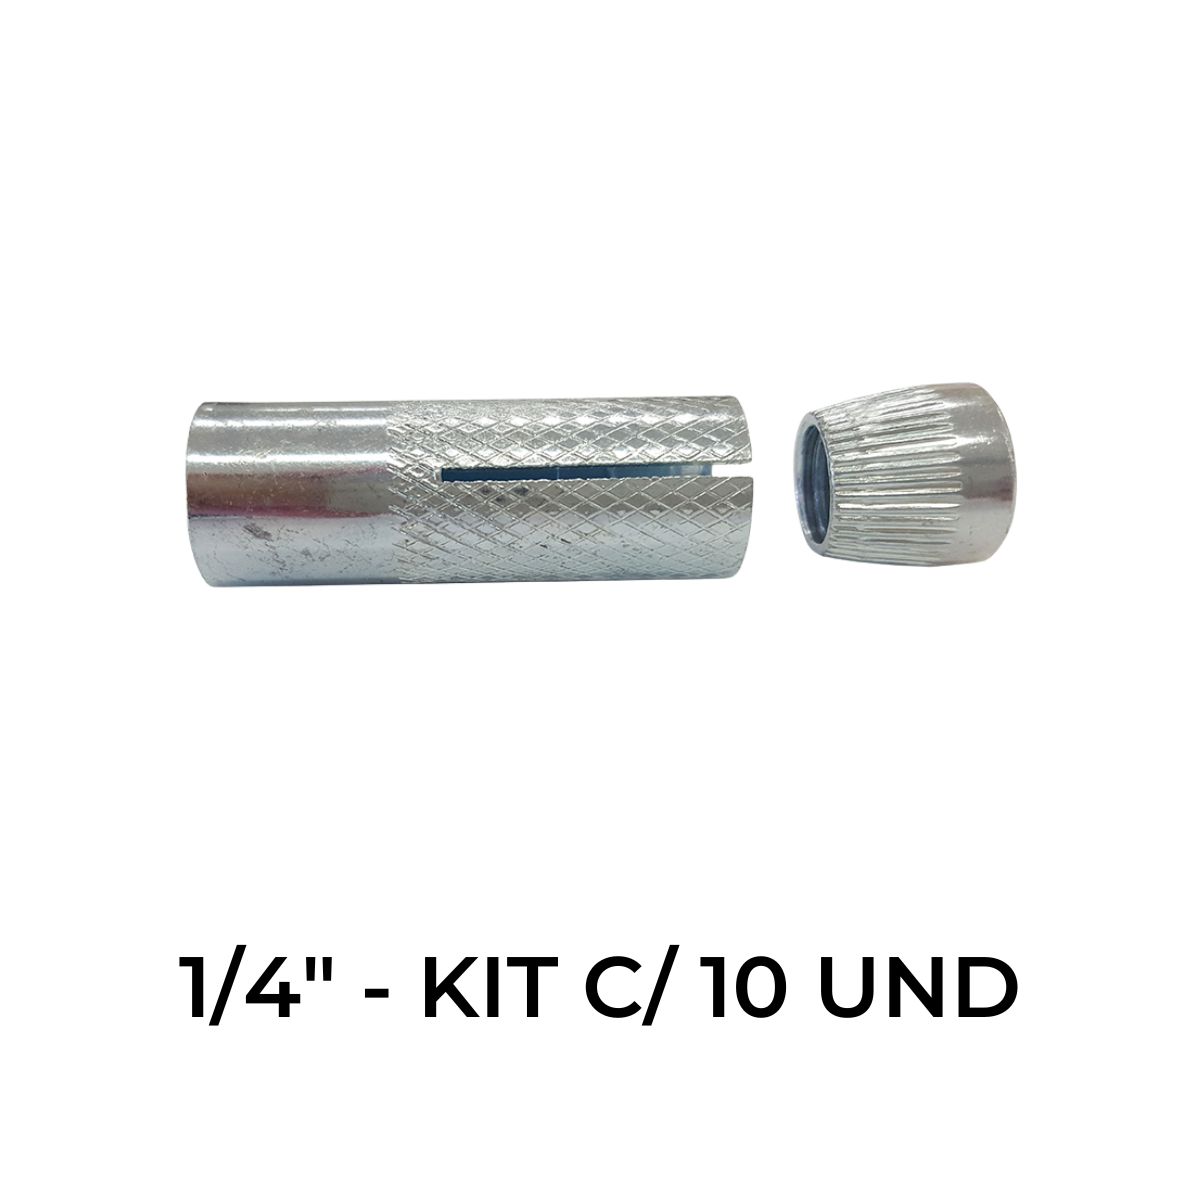 Jaqueta e Cone CB 1/4" - KIT C/ 10UND - Difusor ar condicionado